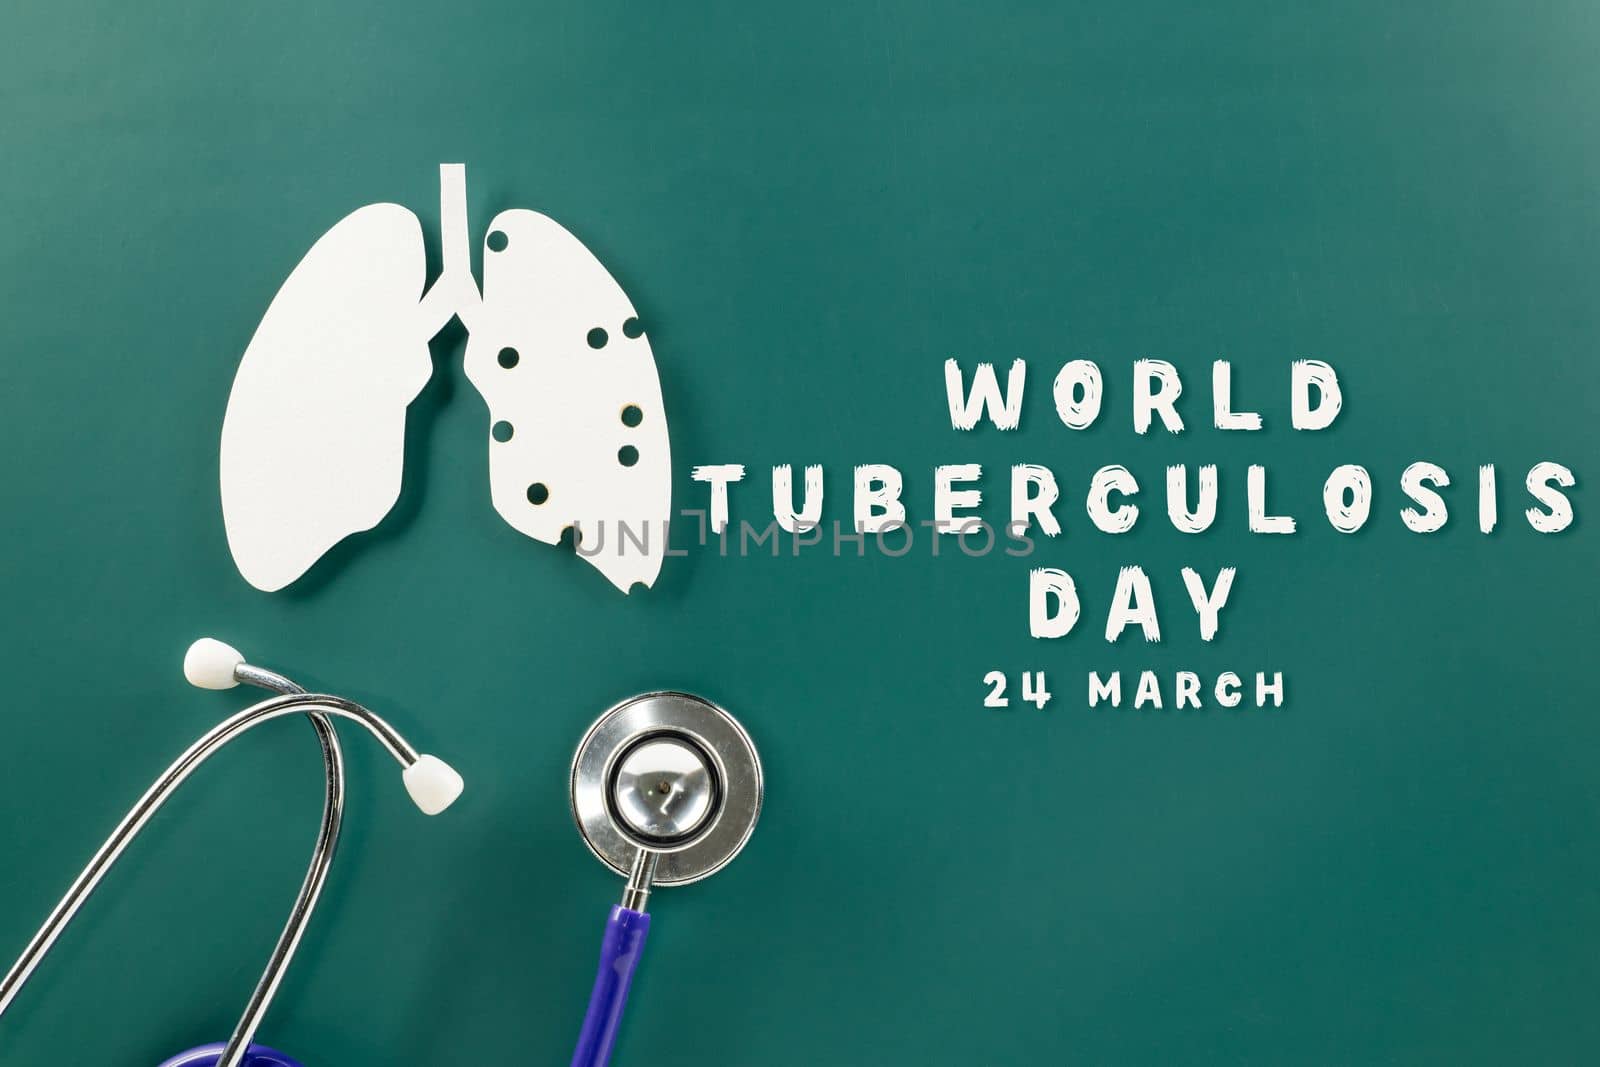 World tuberculosis day by Sorapop